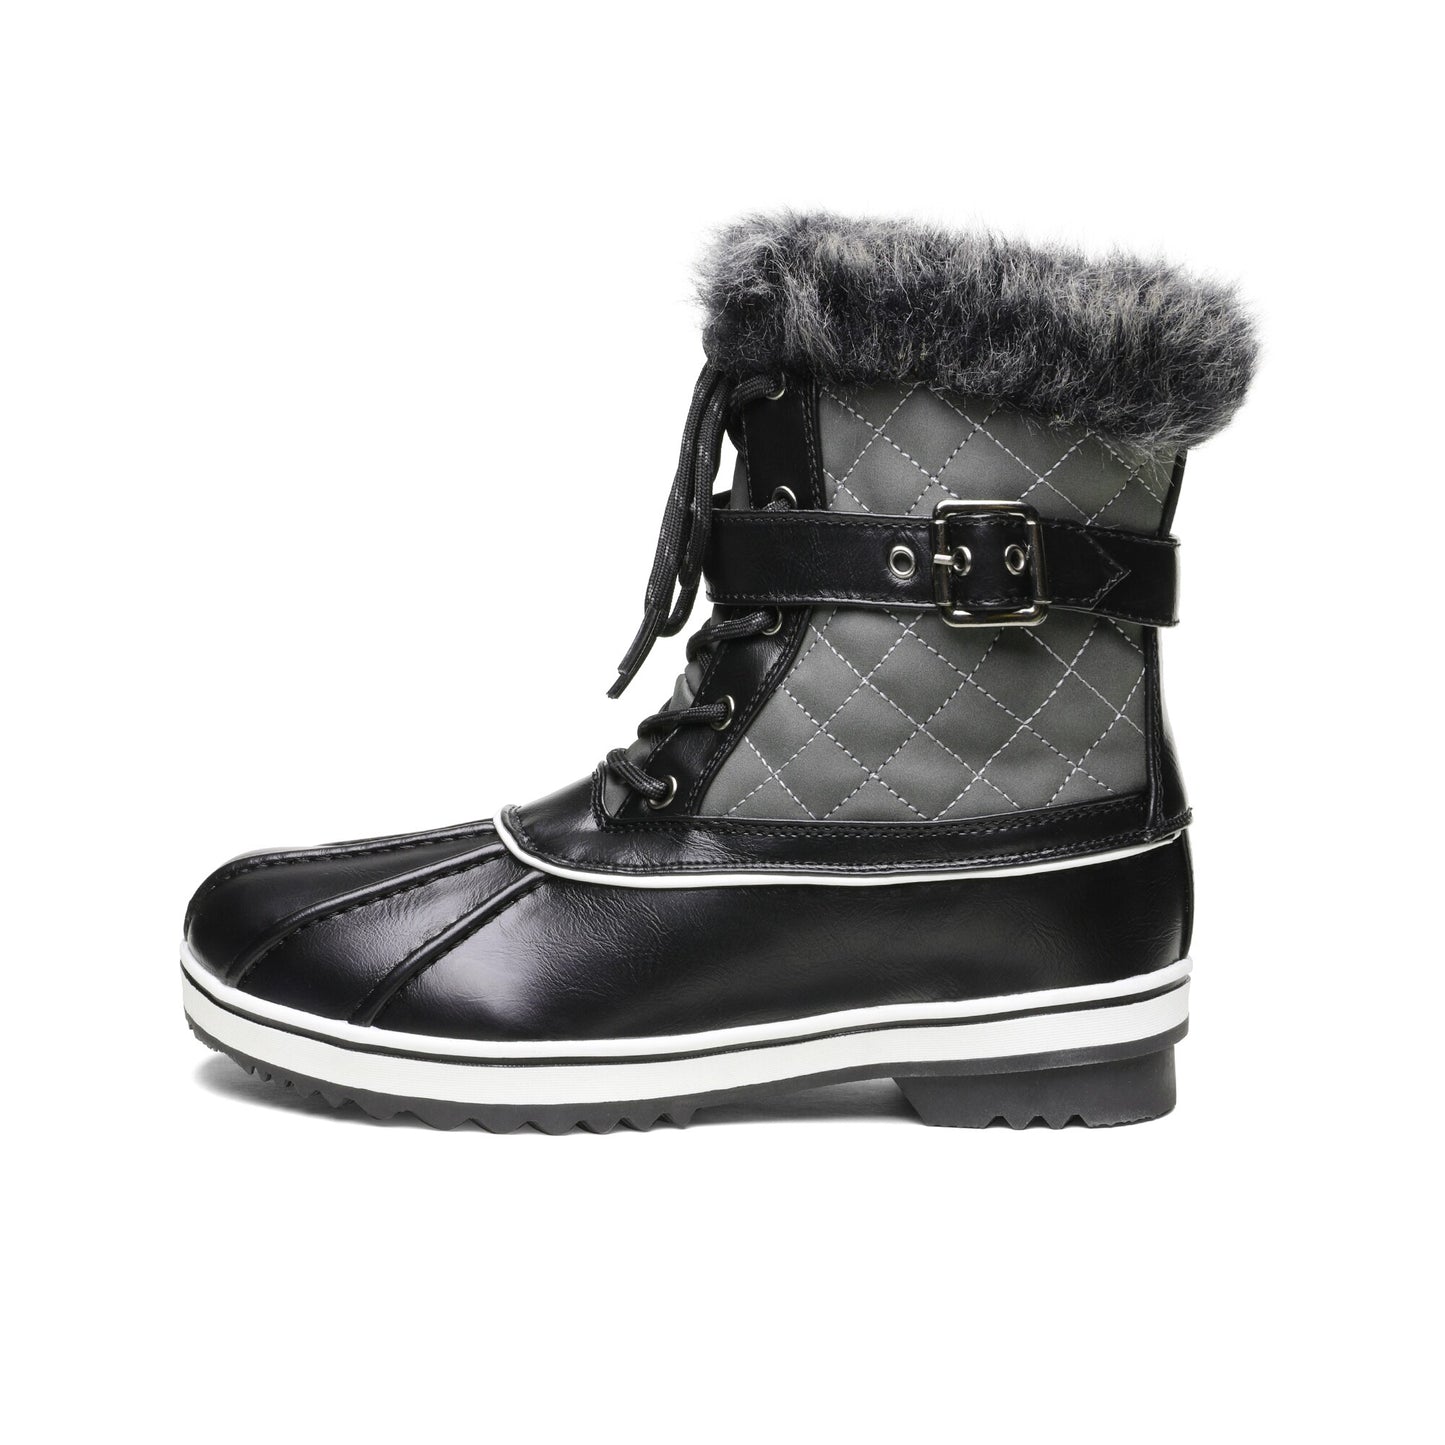 Women Low Top Snow Boots Shoes